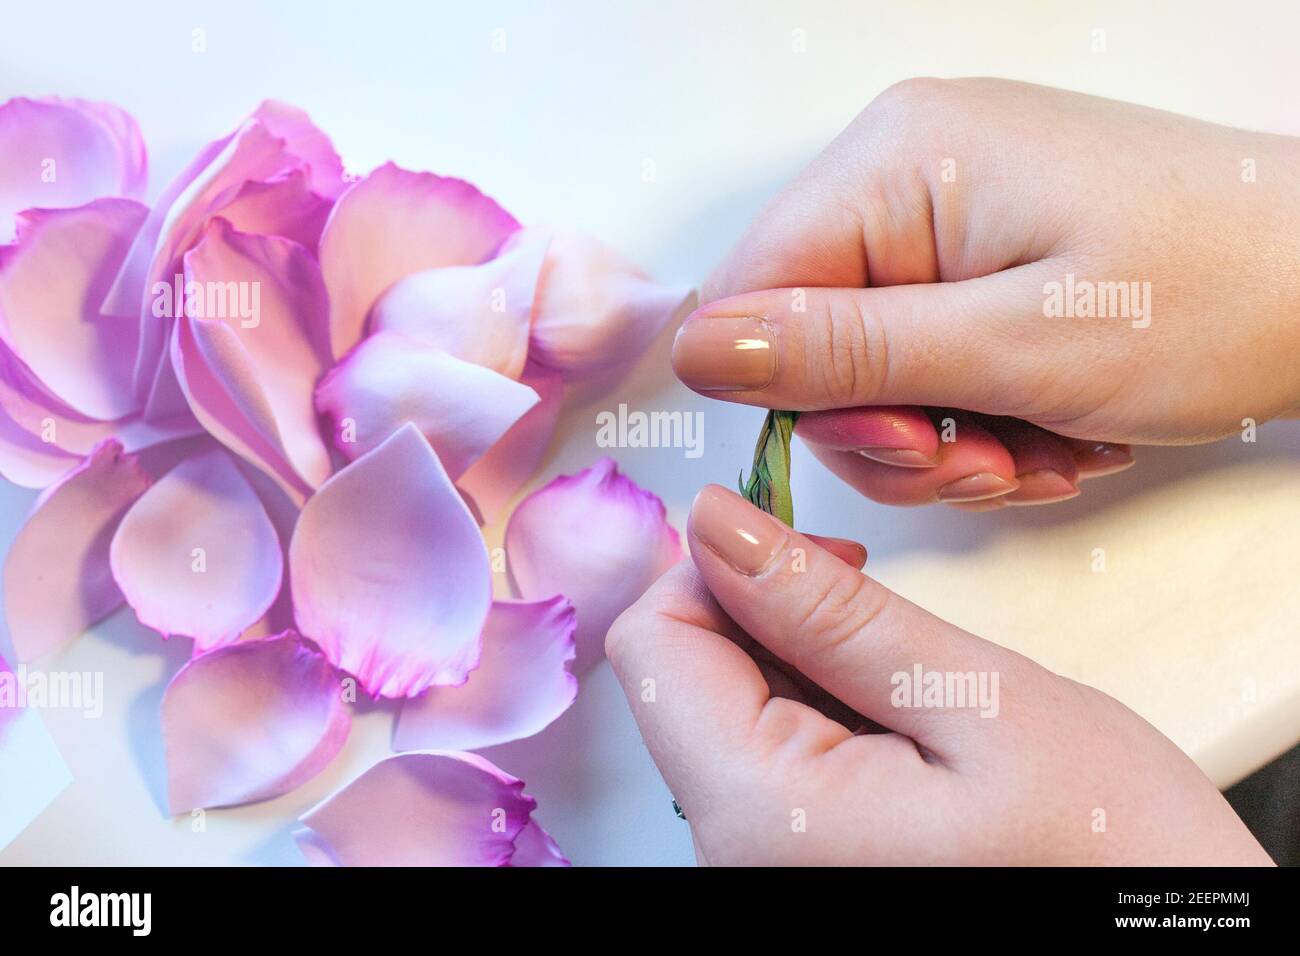 Flores de Rosa artificial de espuma, foamiran taller de masterclass paso a paso, guía de artesanía, Foto de stock